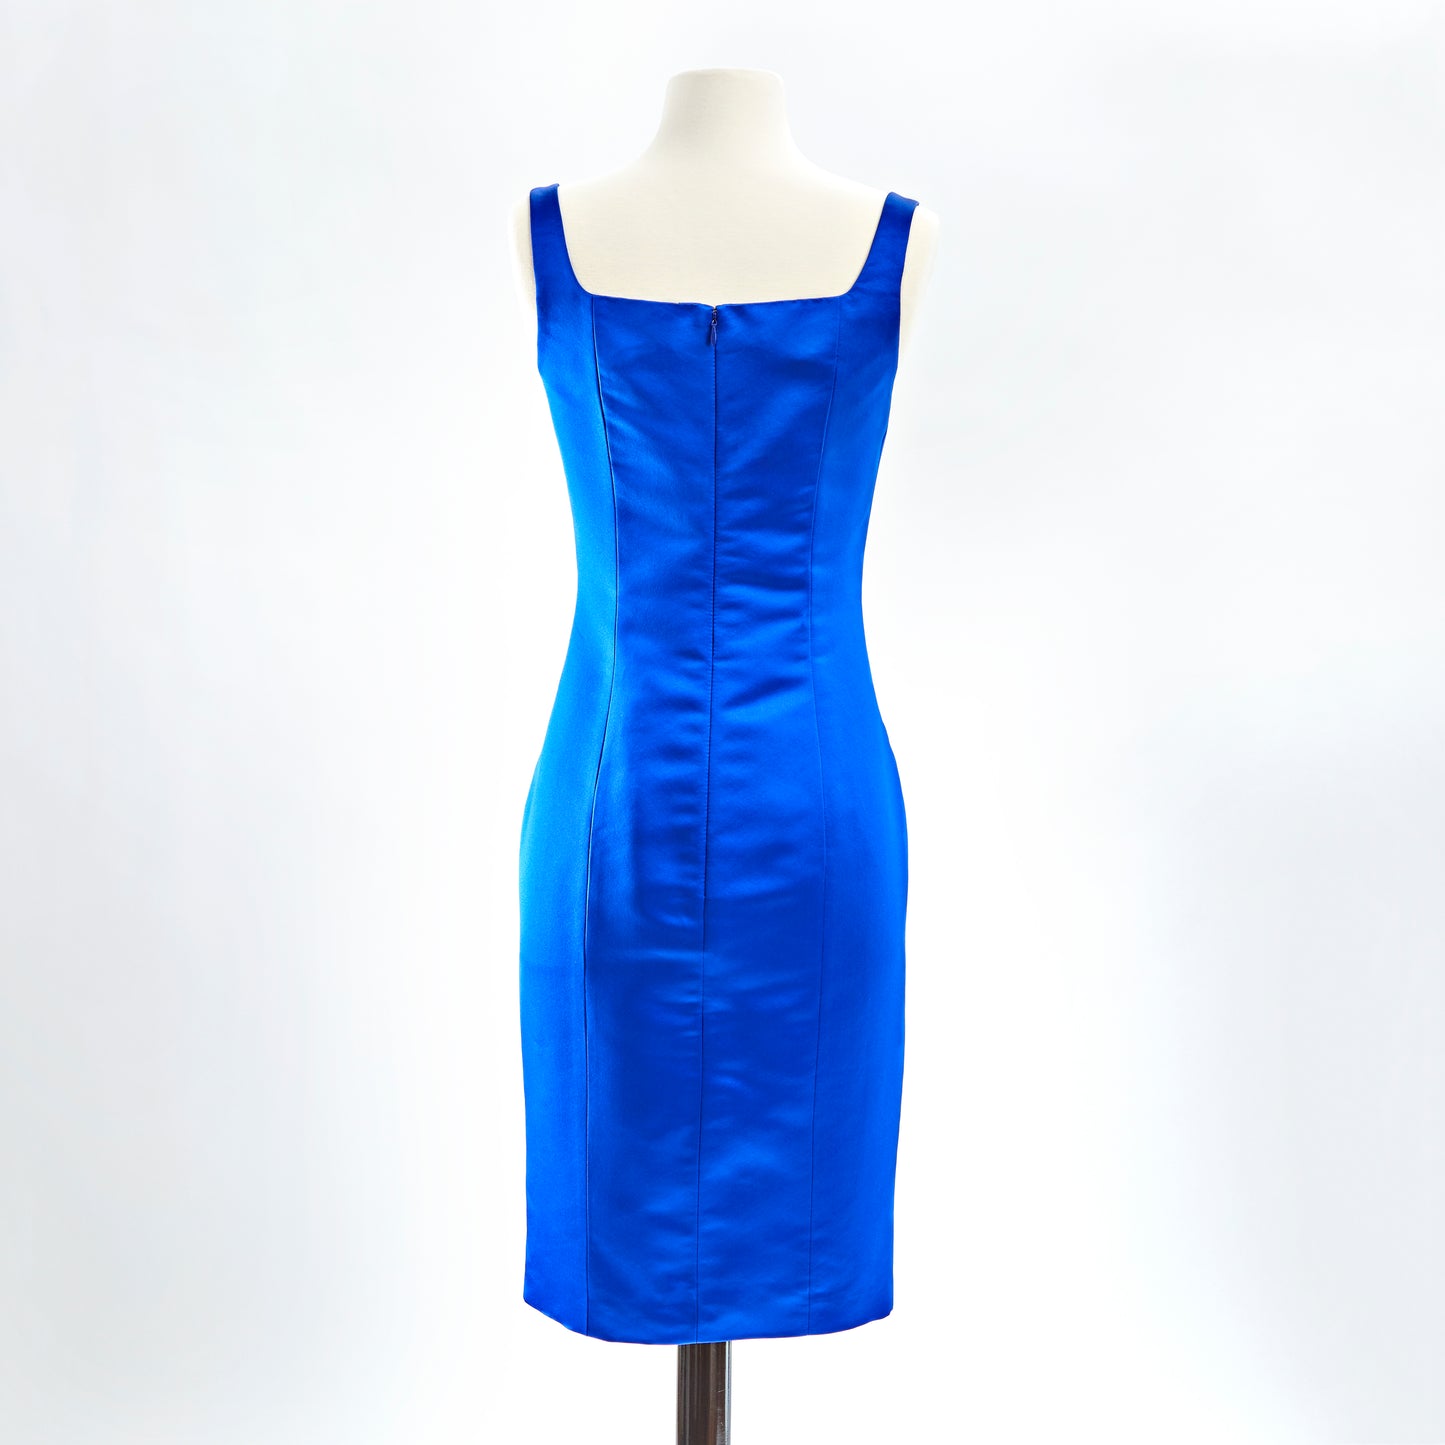 Sapphire blue duchess silk satin square neck sheath cocktail dress back view